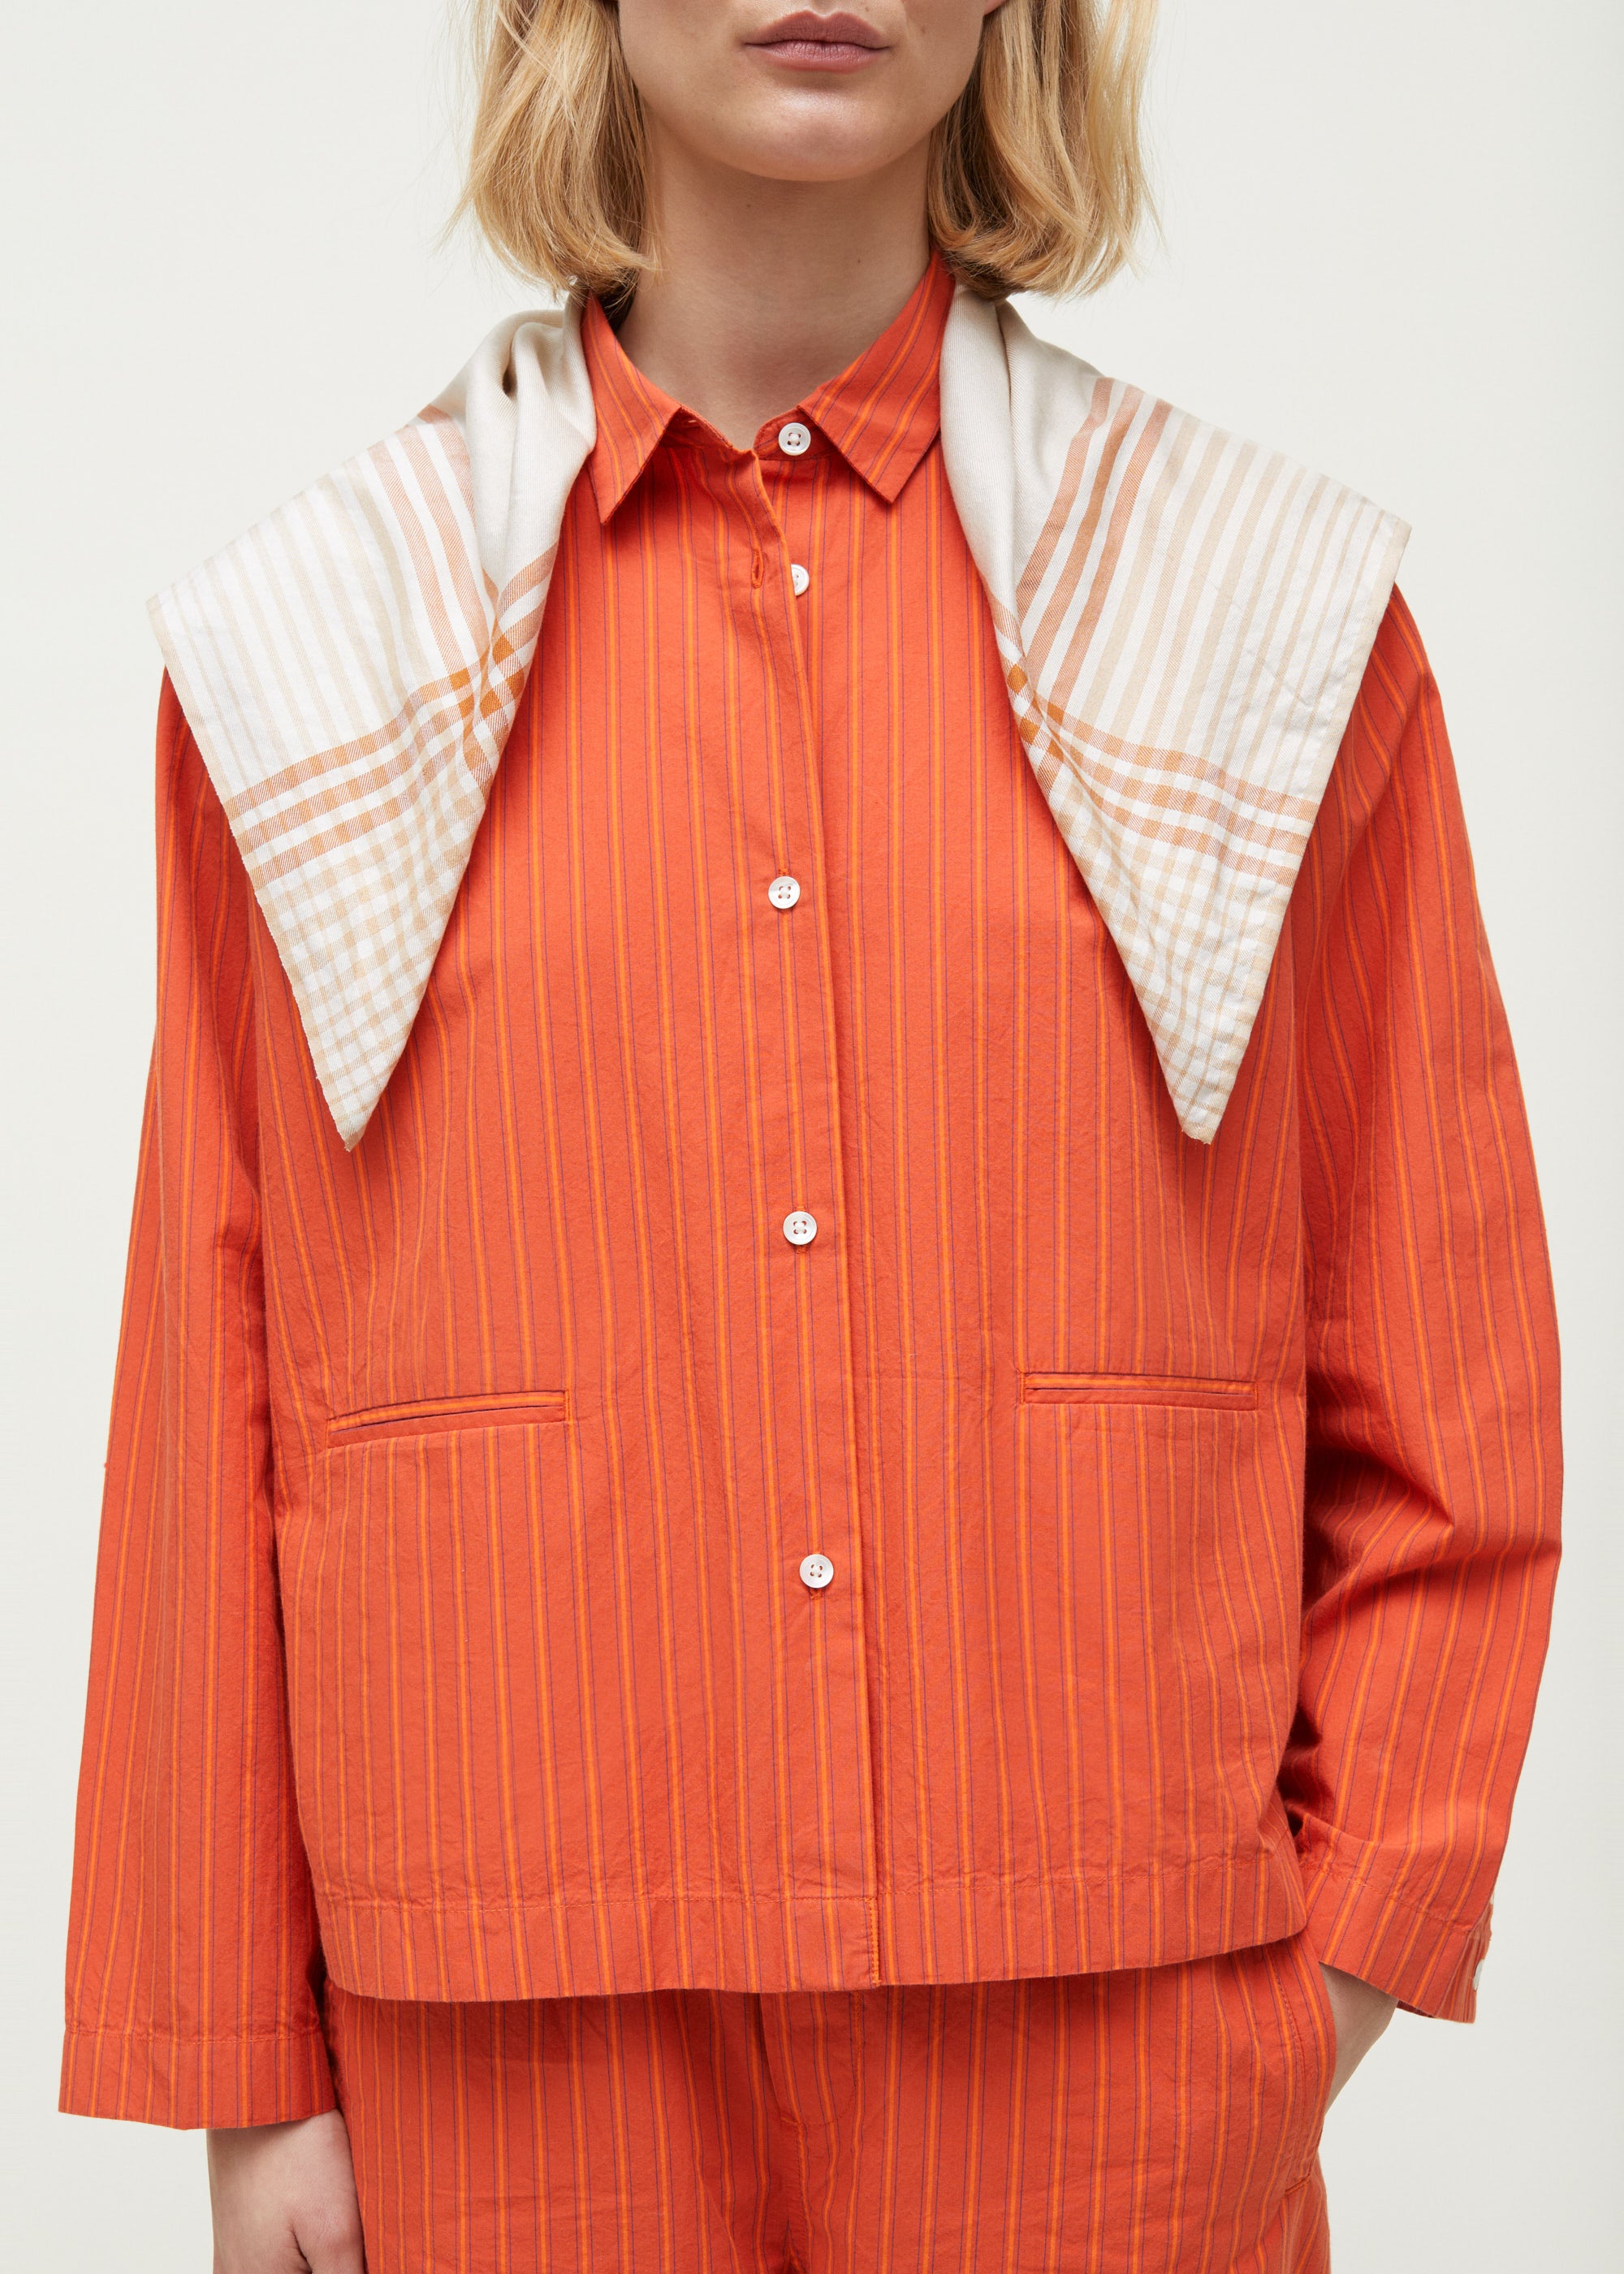 Atla shirt striped | Mix Burnt Orange